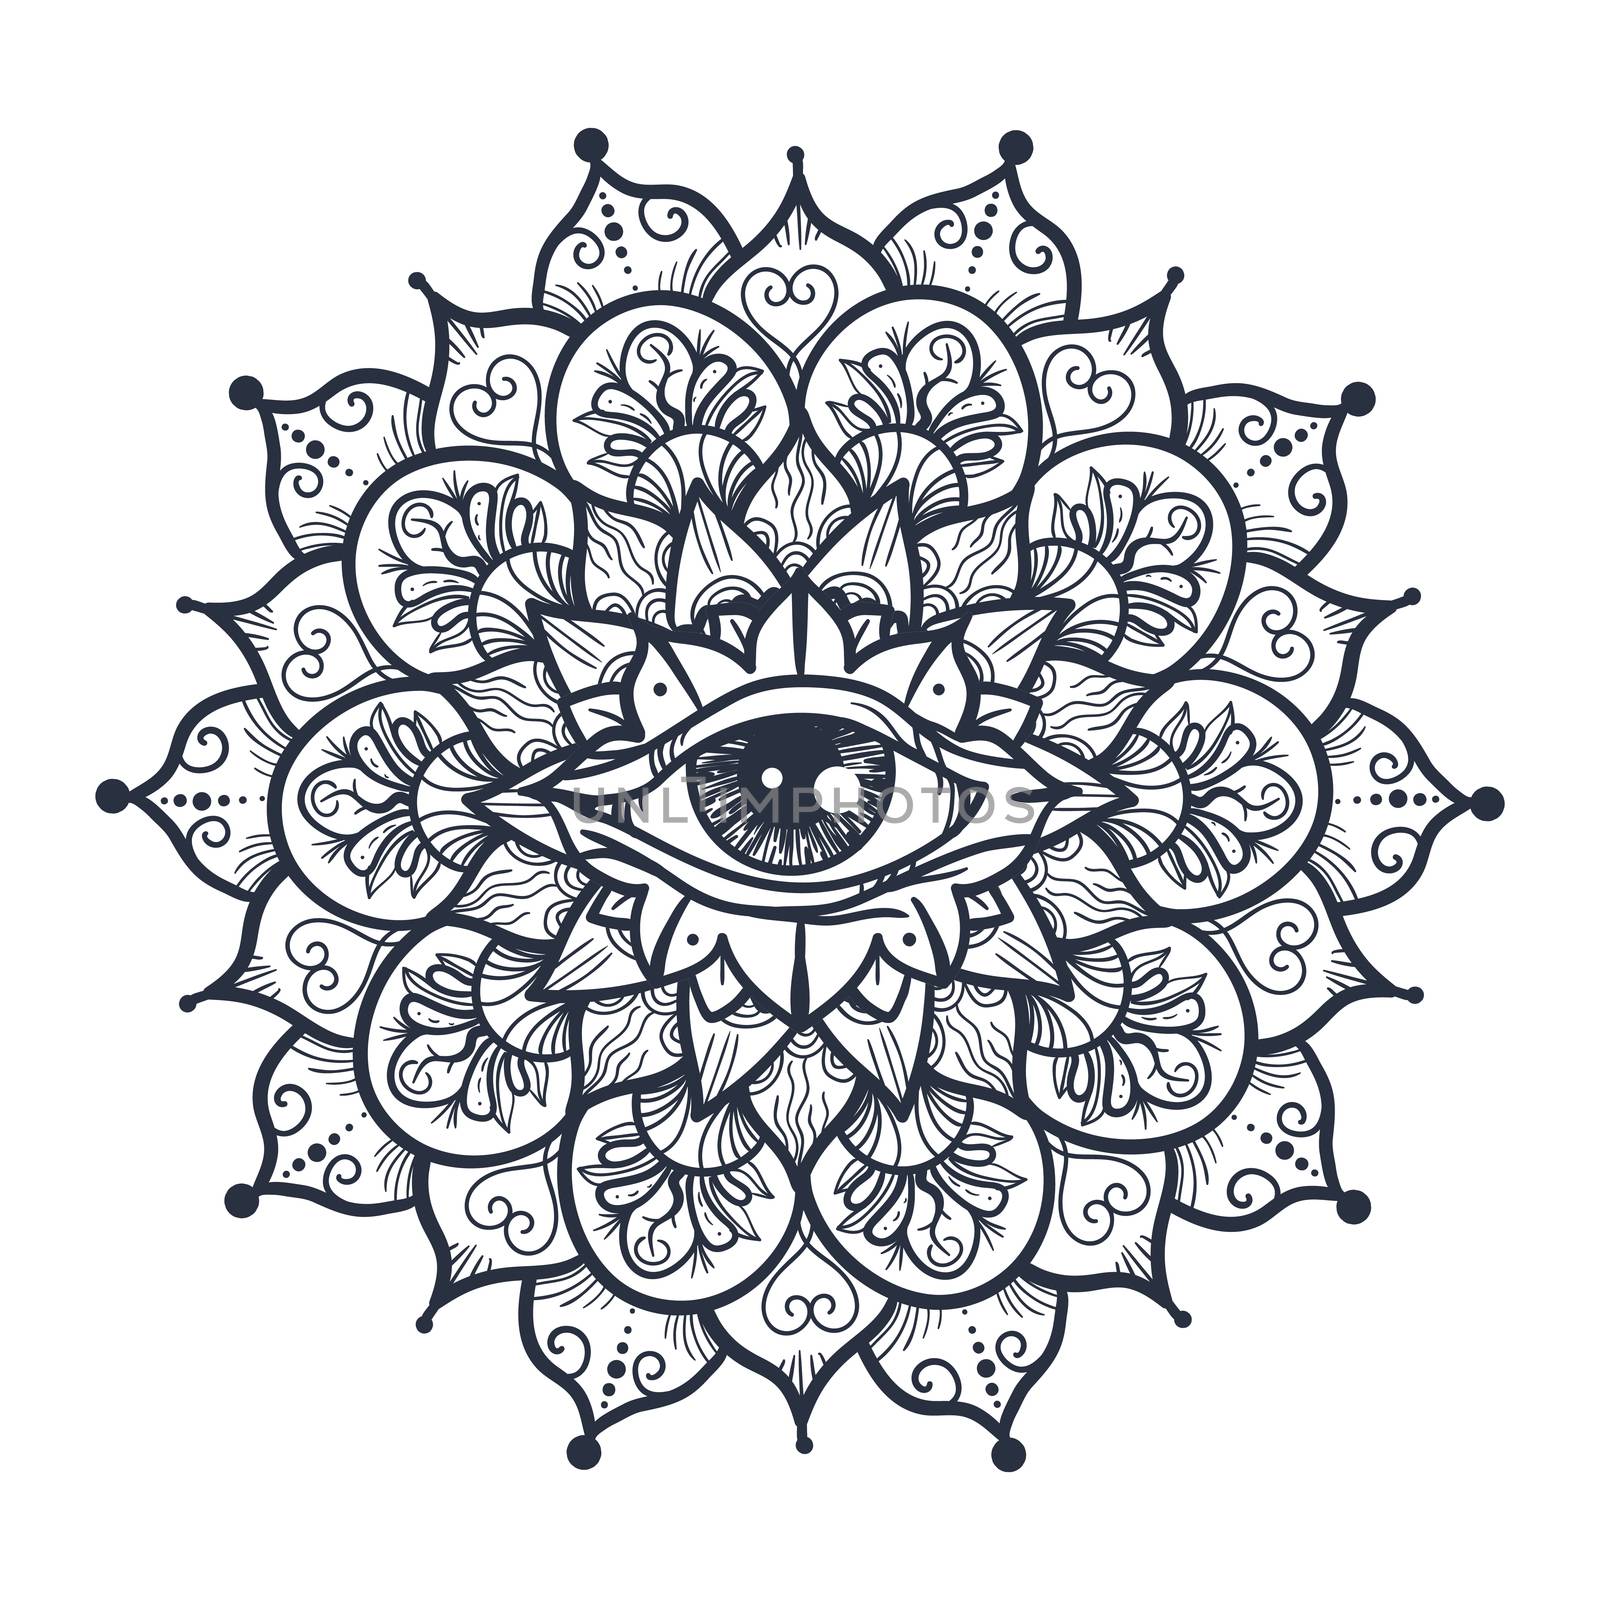 All Seeing Eye in Mandala by barsrsind